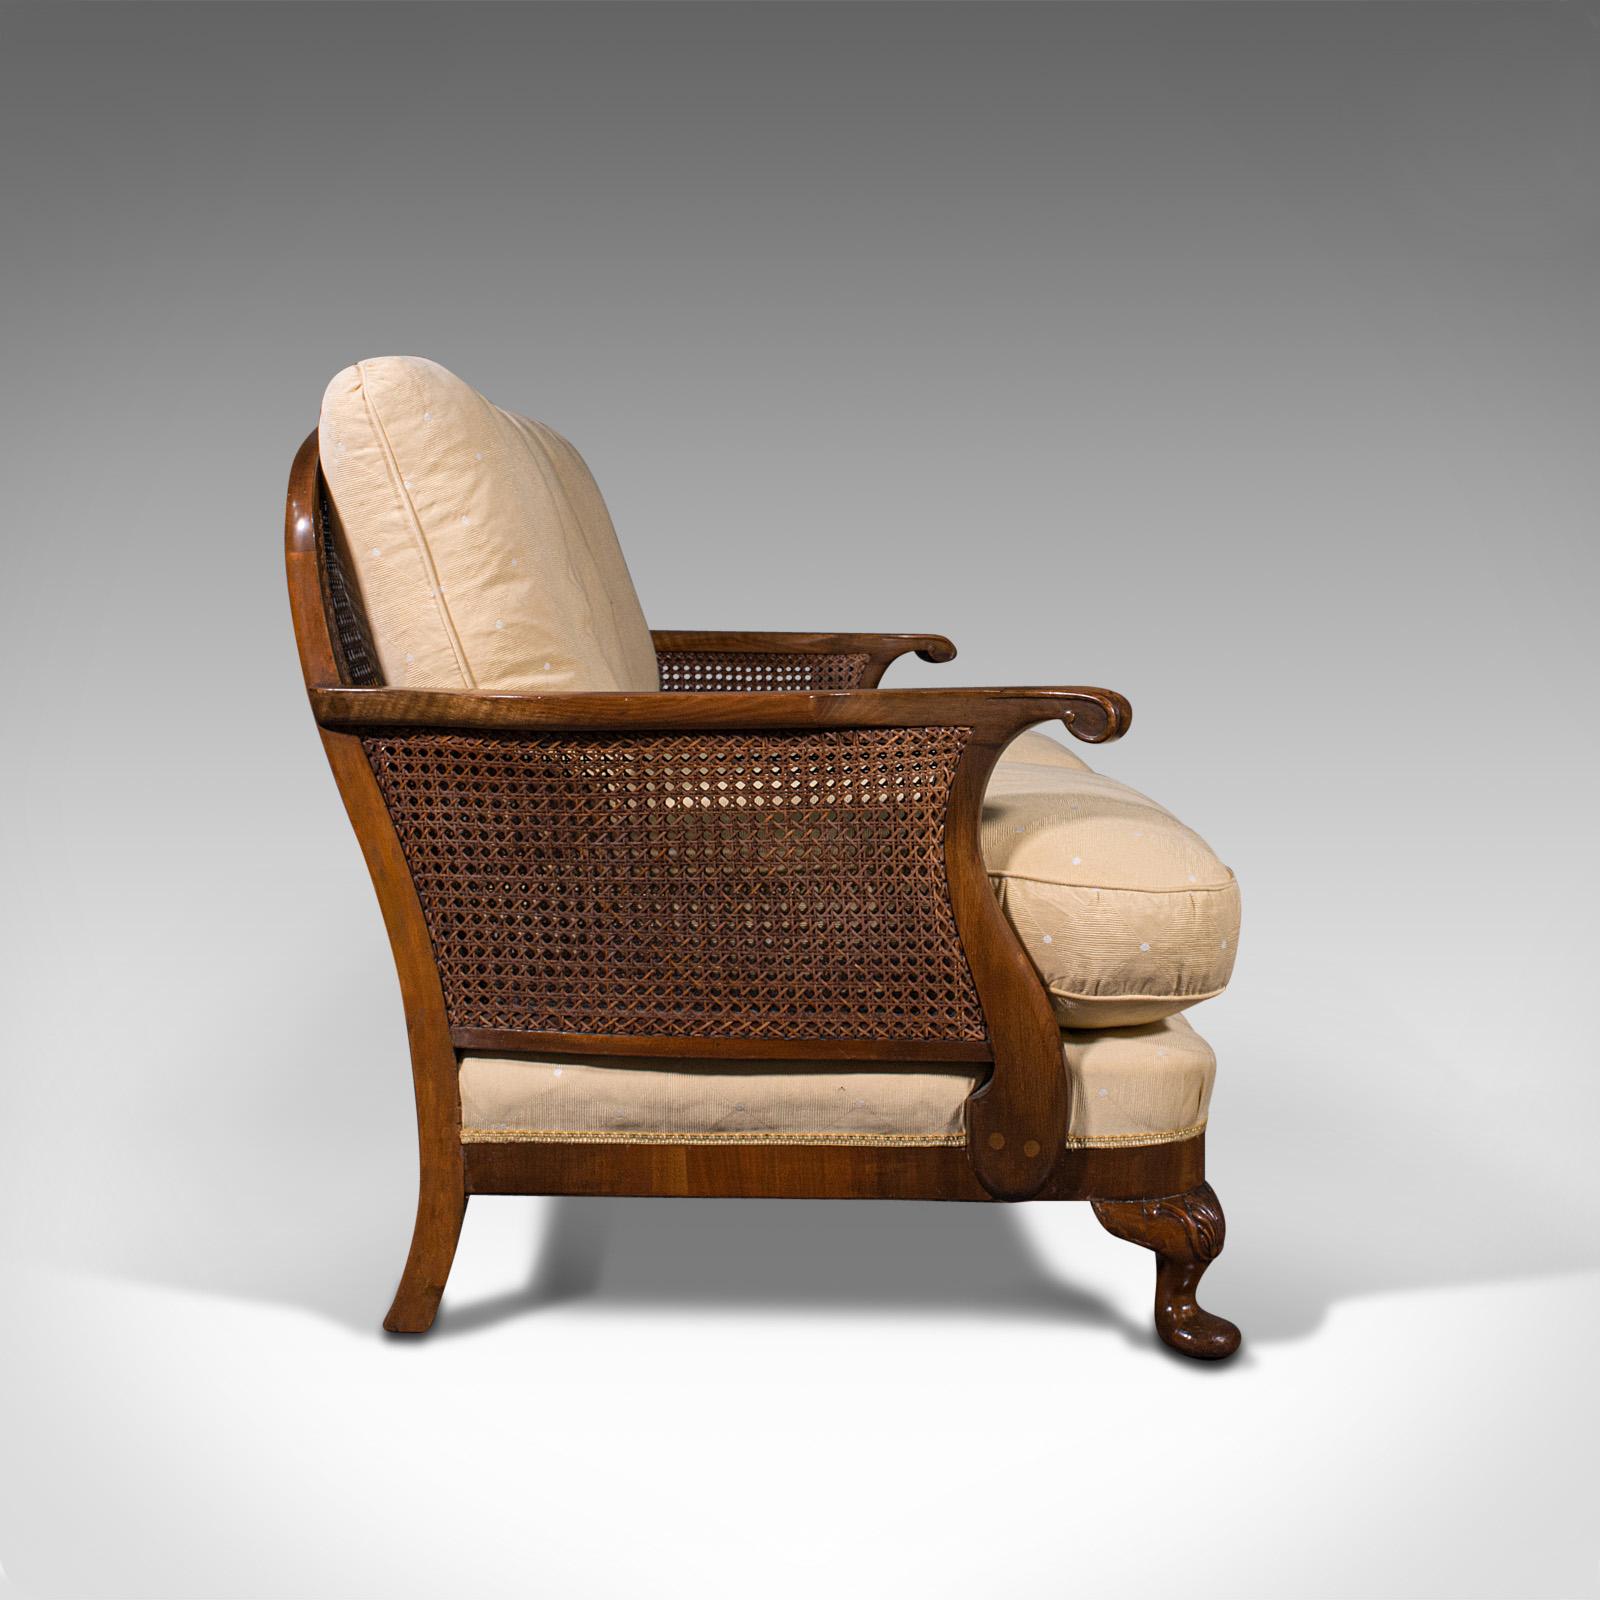 British Antique Bergere Sofa, English, Walnut, Cane, 3 Seat, Settee, Art Deco, Edwardian